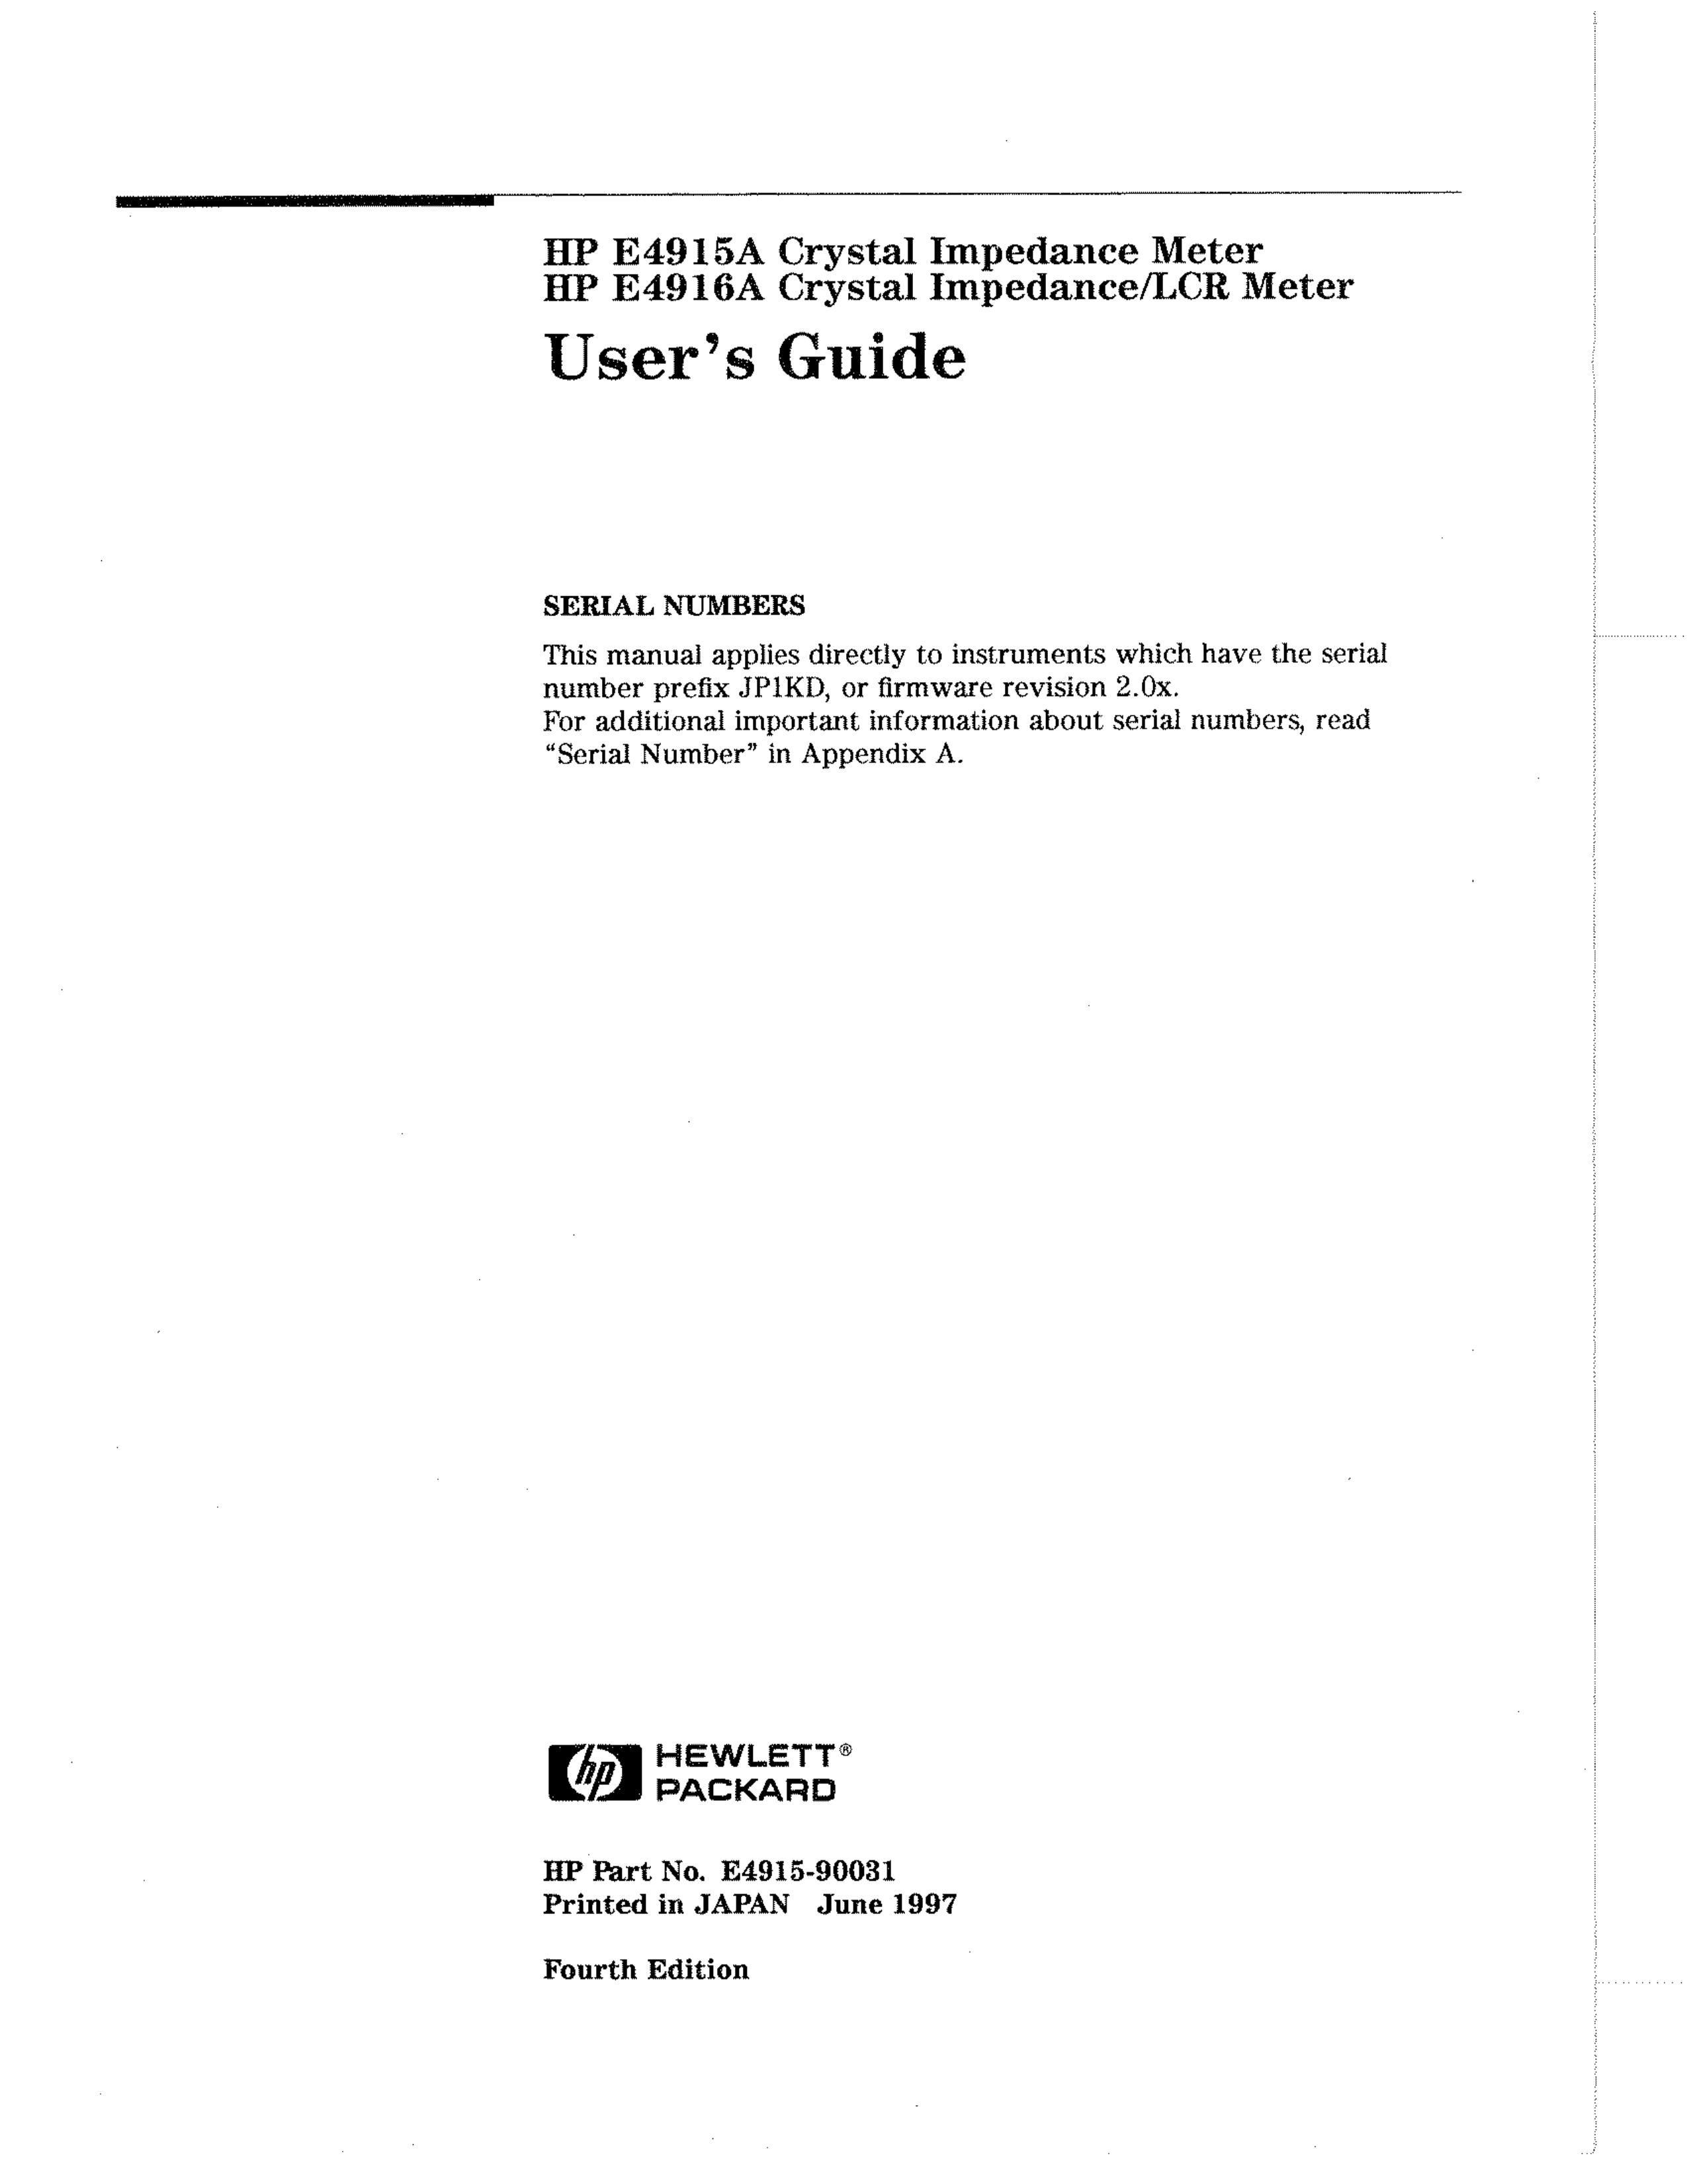 HP (Hewlett-Packard) HP E4915A Weather Radio User Manual